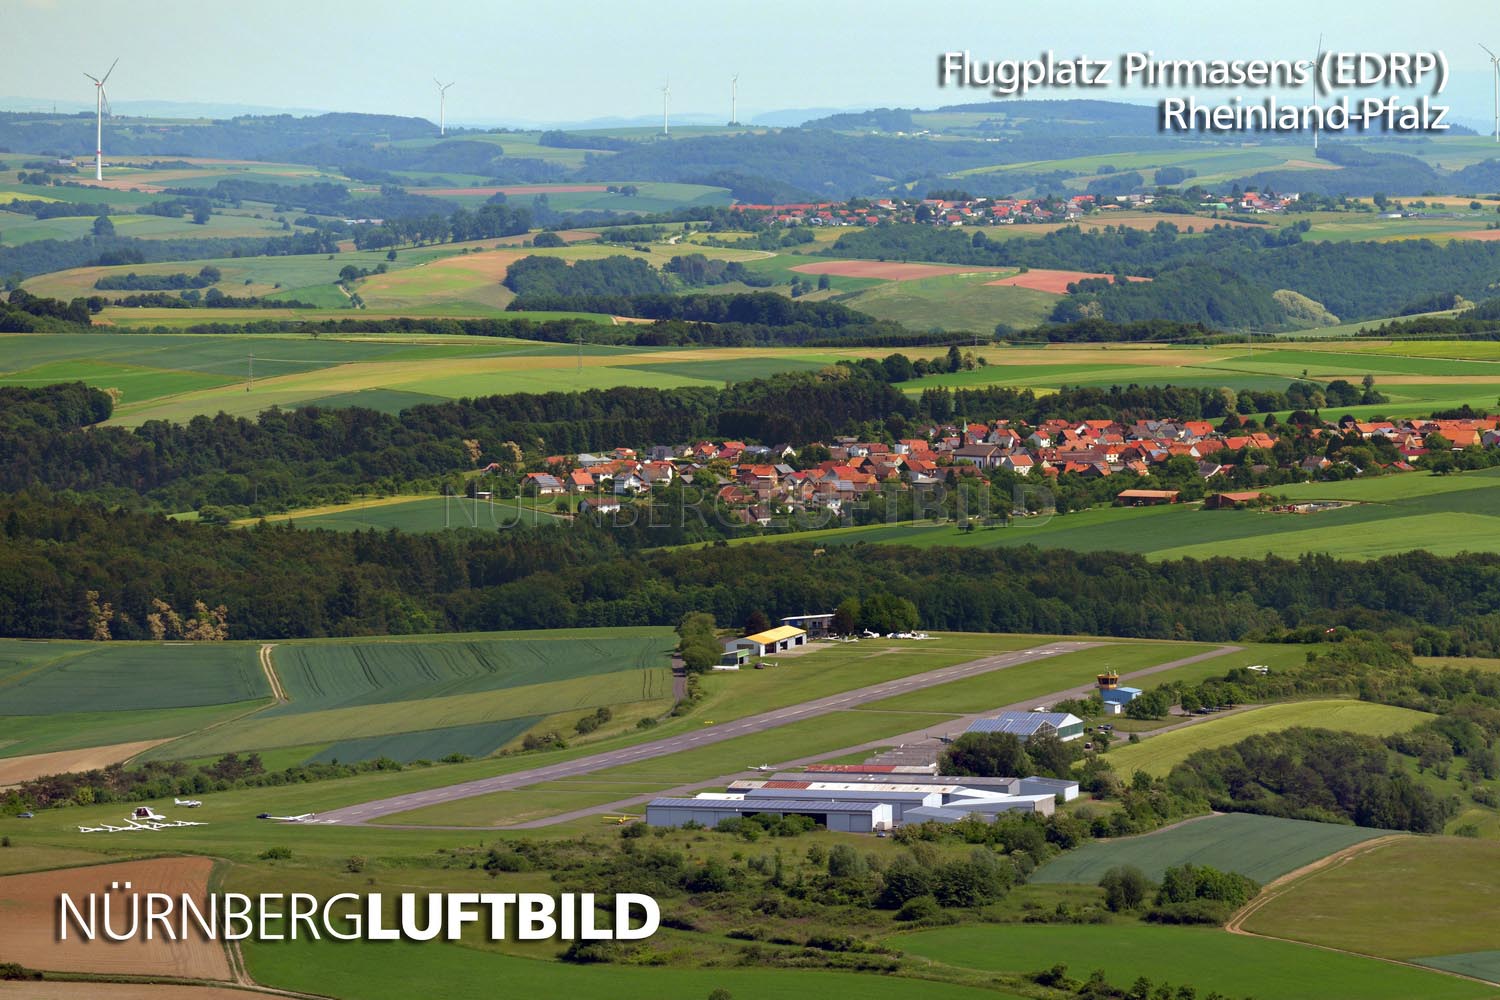 Flugplatz Pirmasens (EDRP), Rheinland-Pfalz